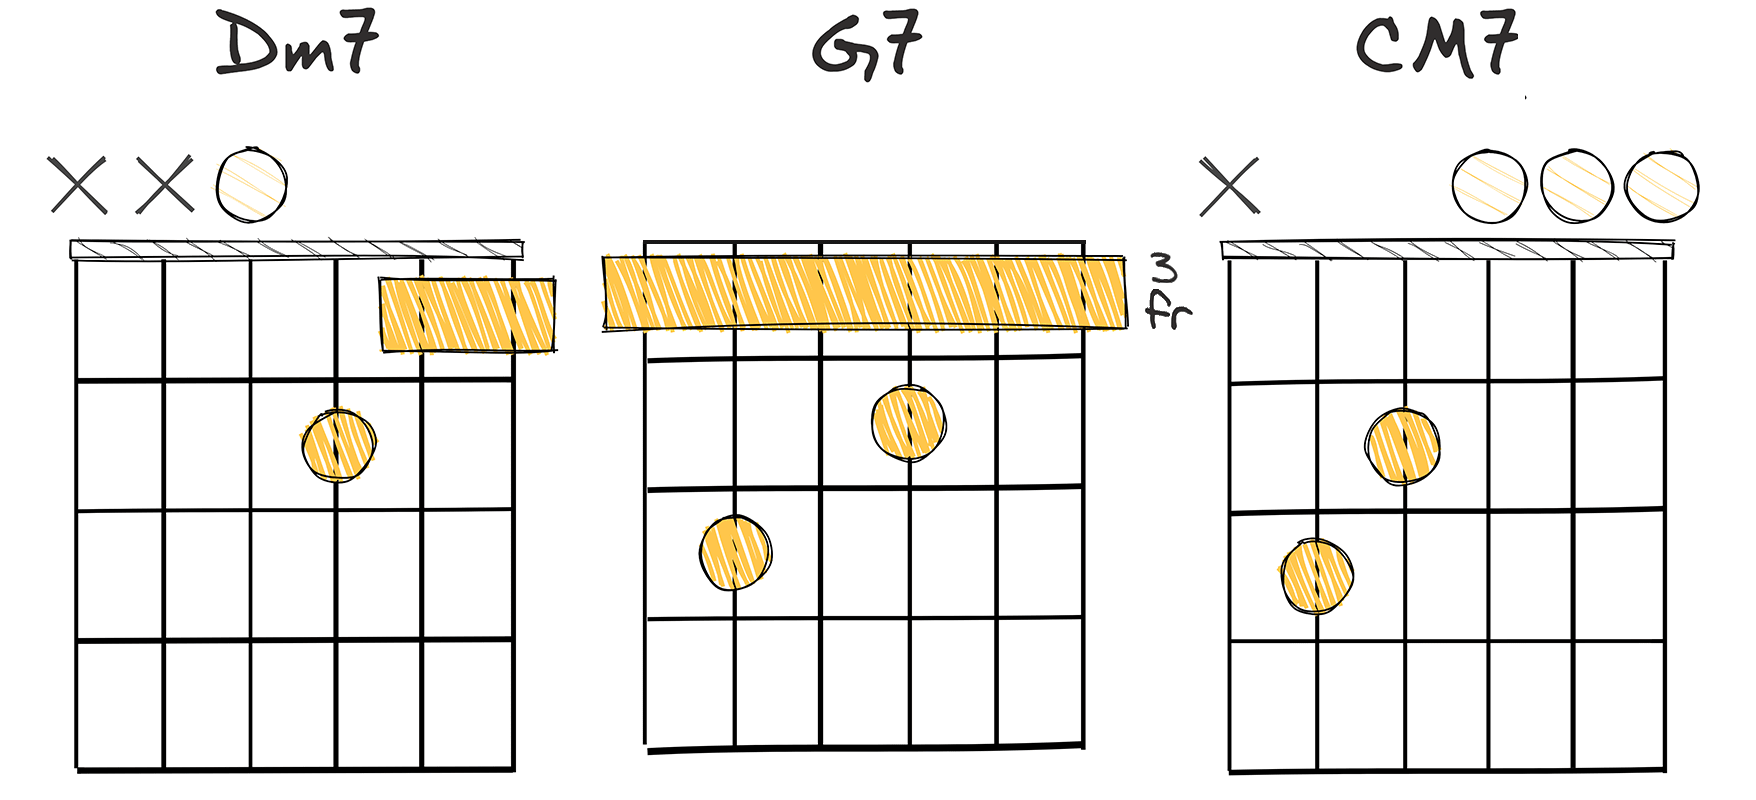 II-V-I (2-5-1) chords diagram